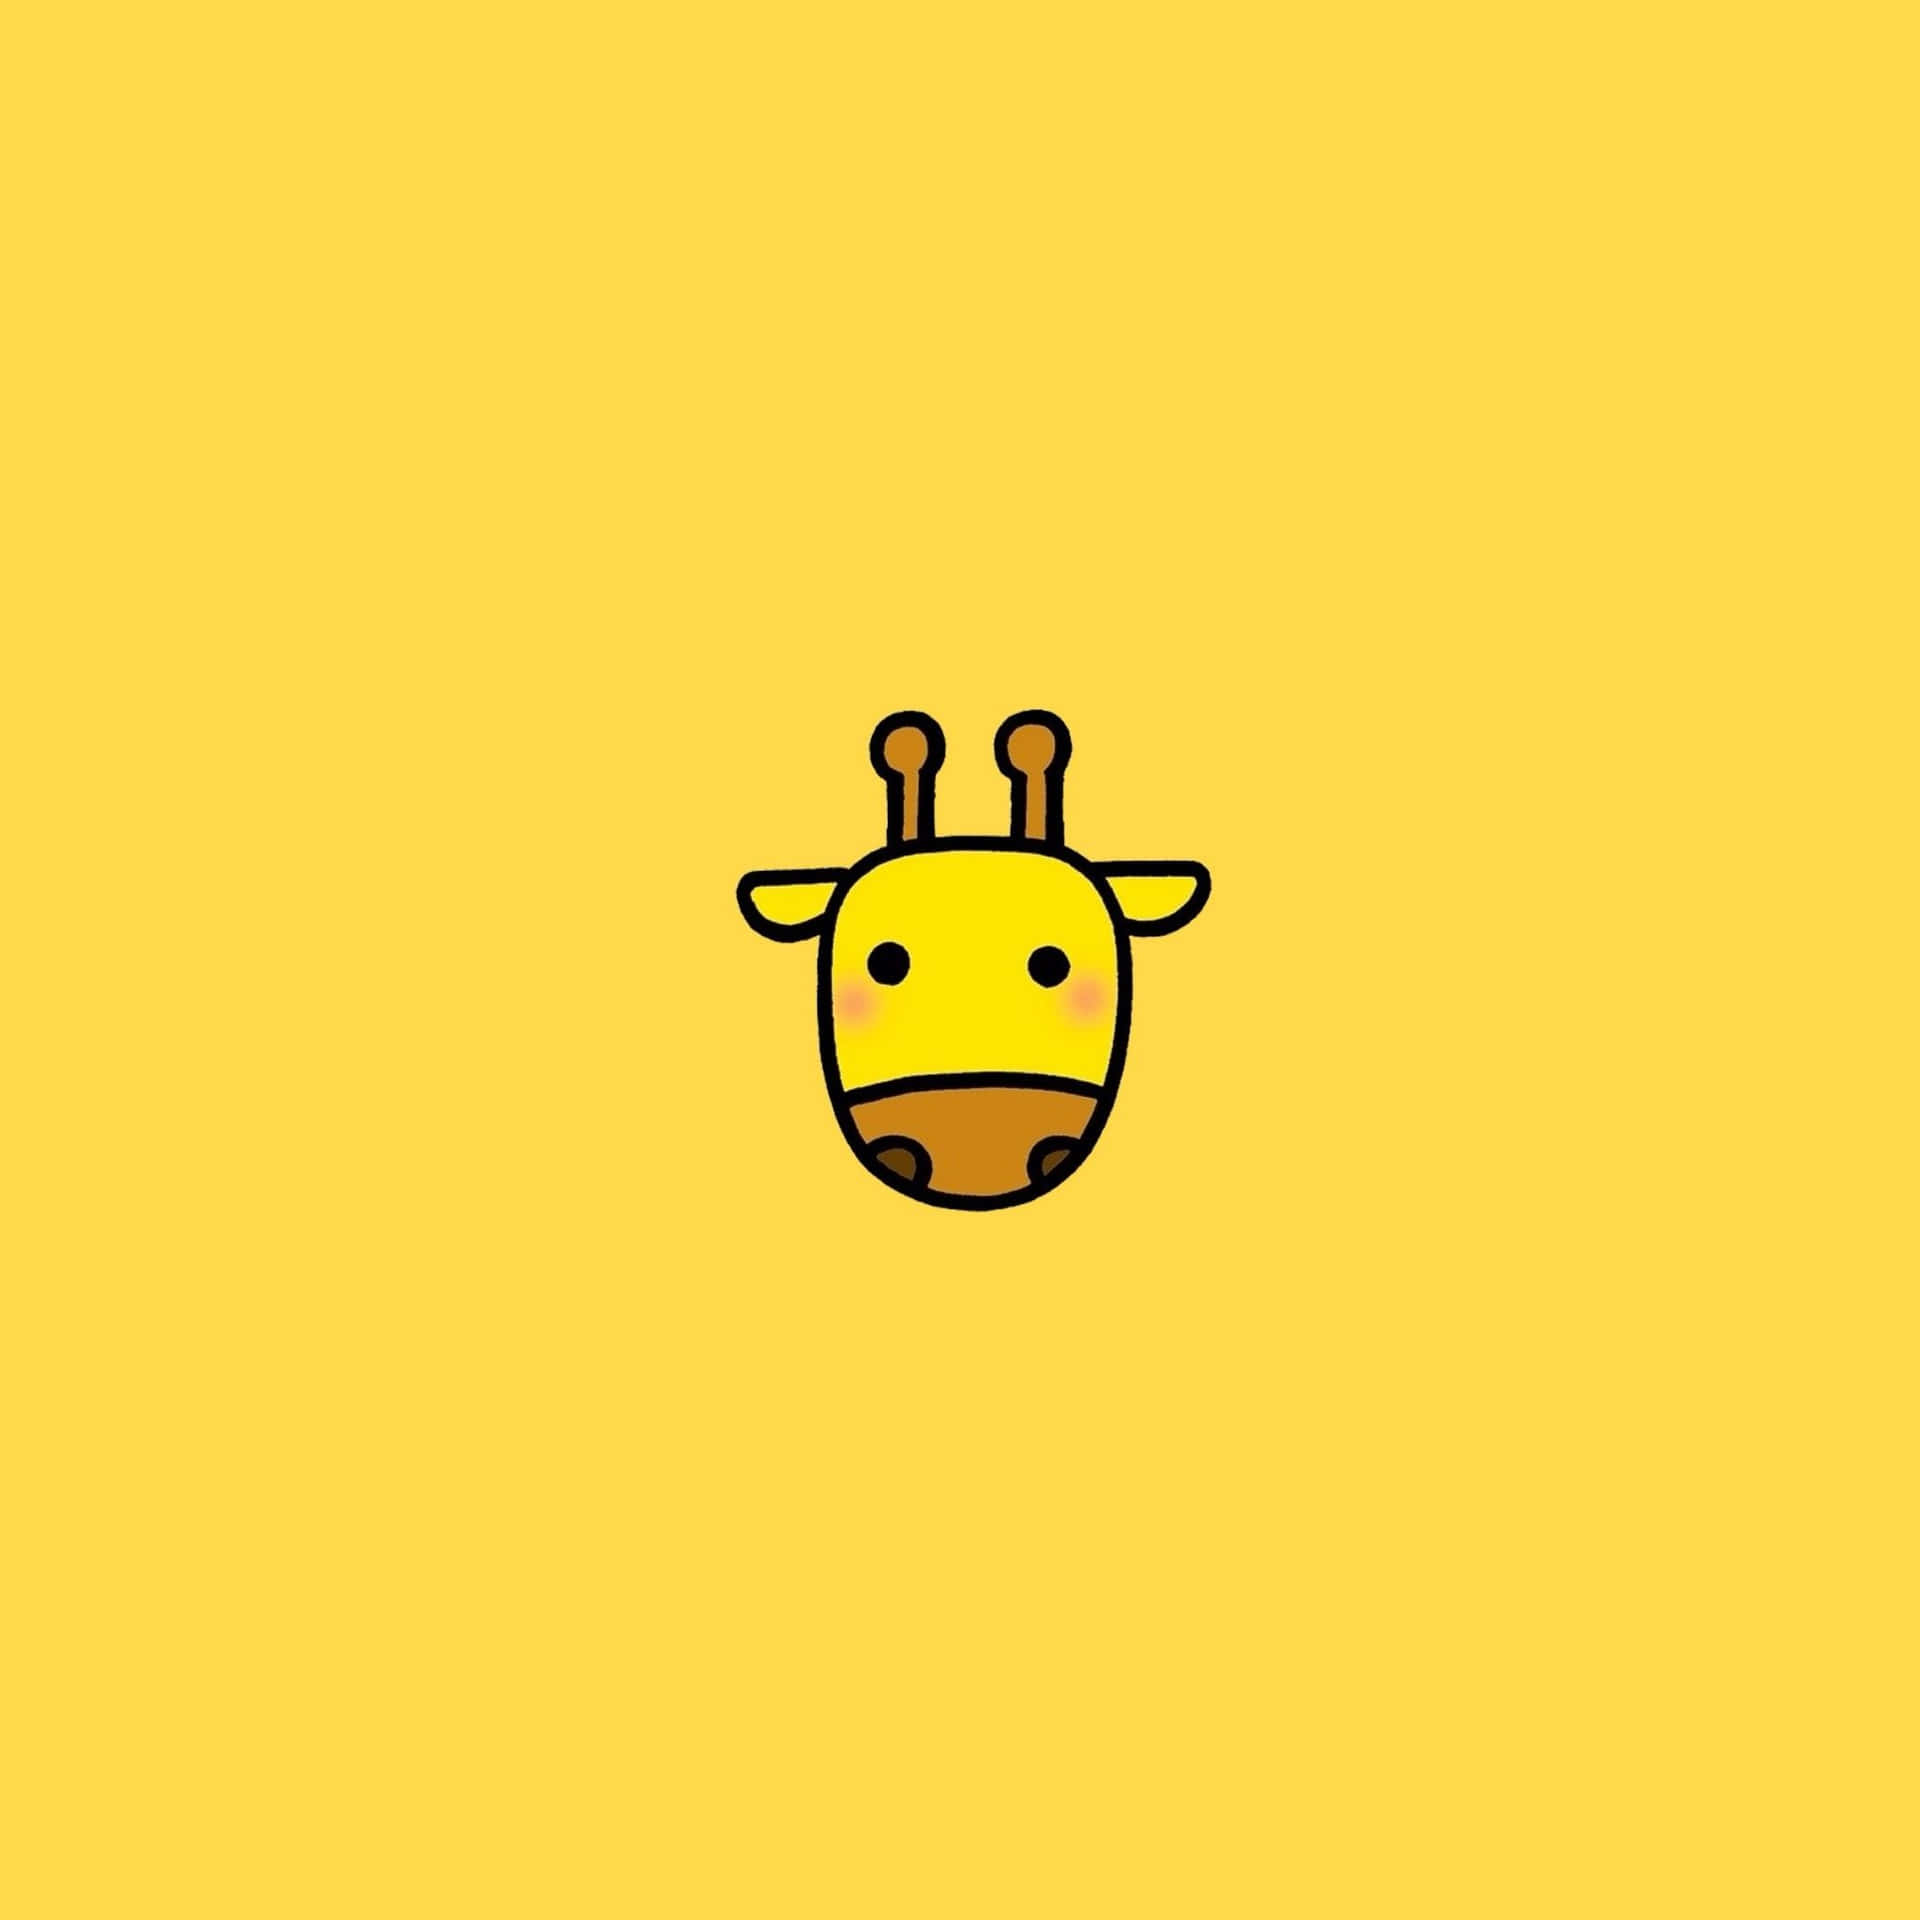 A Giraffe Head On A Yellow Background